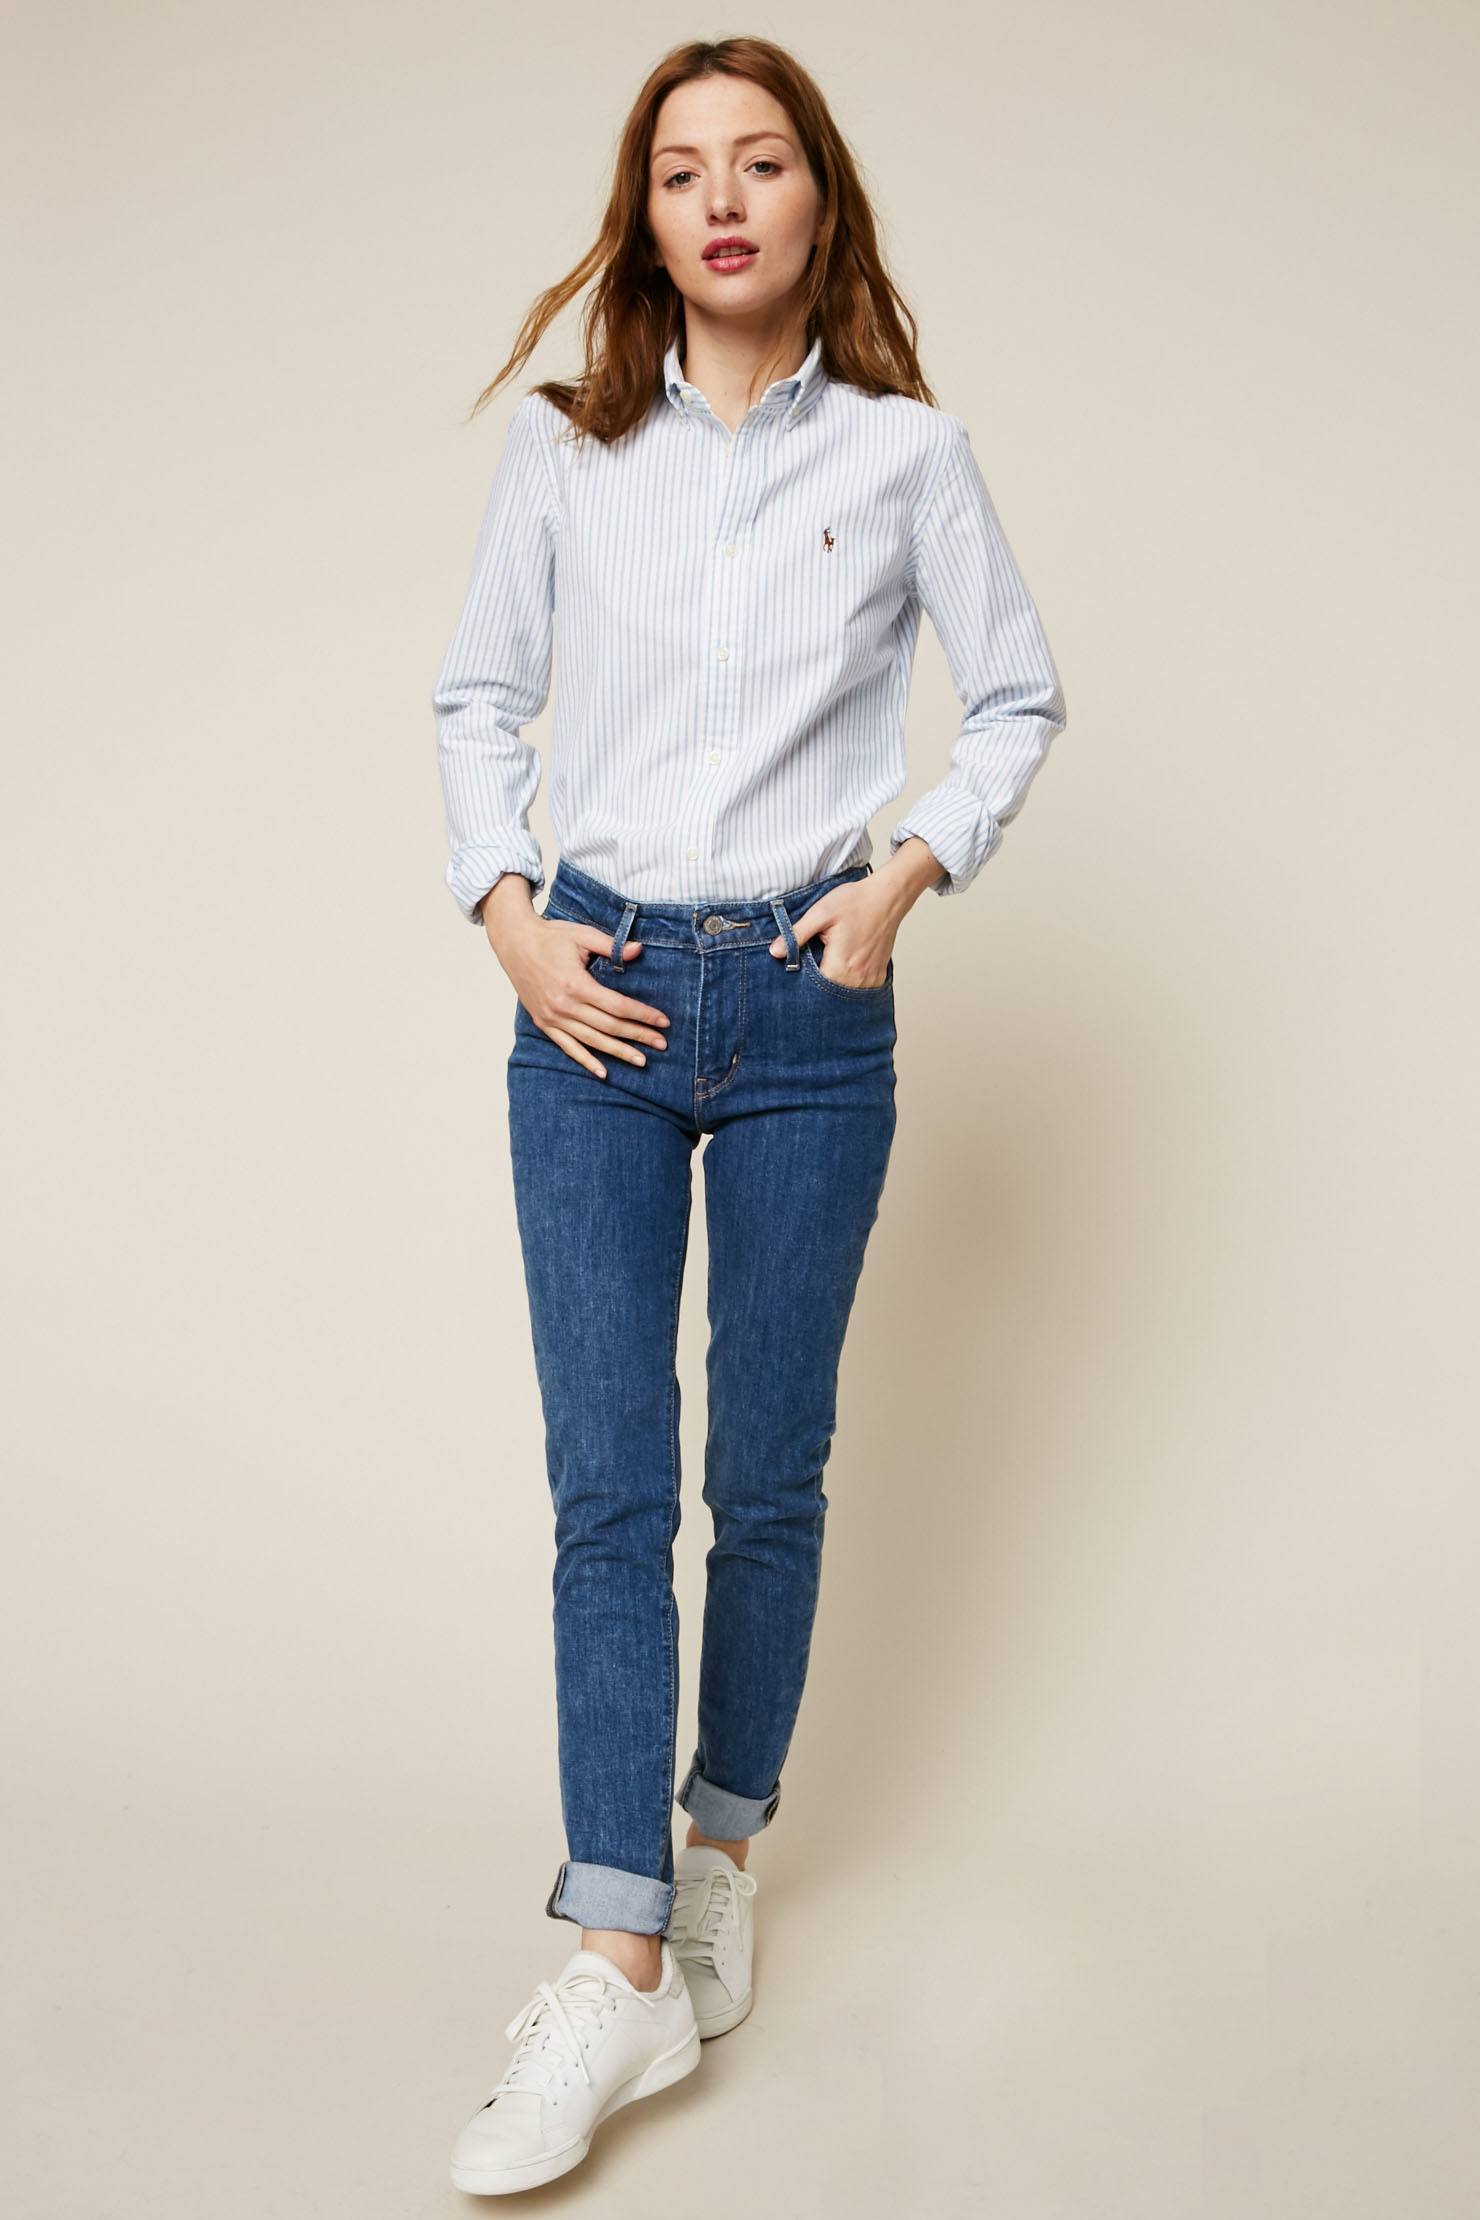 Polo Ralph Lauren Chemise à rayures blanc et bleu - Monshowroom